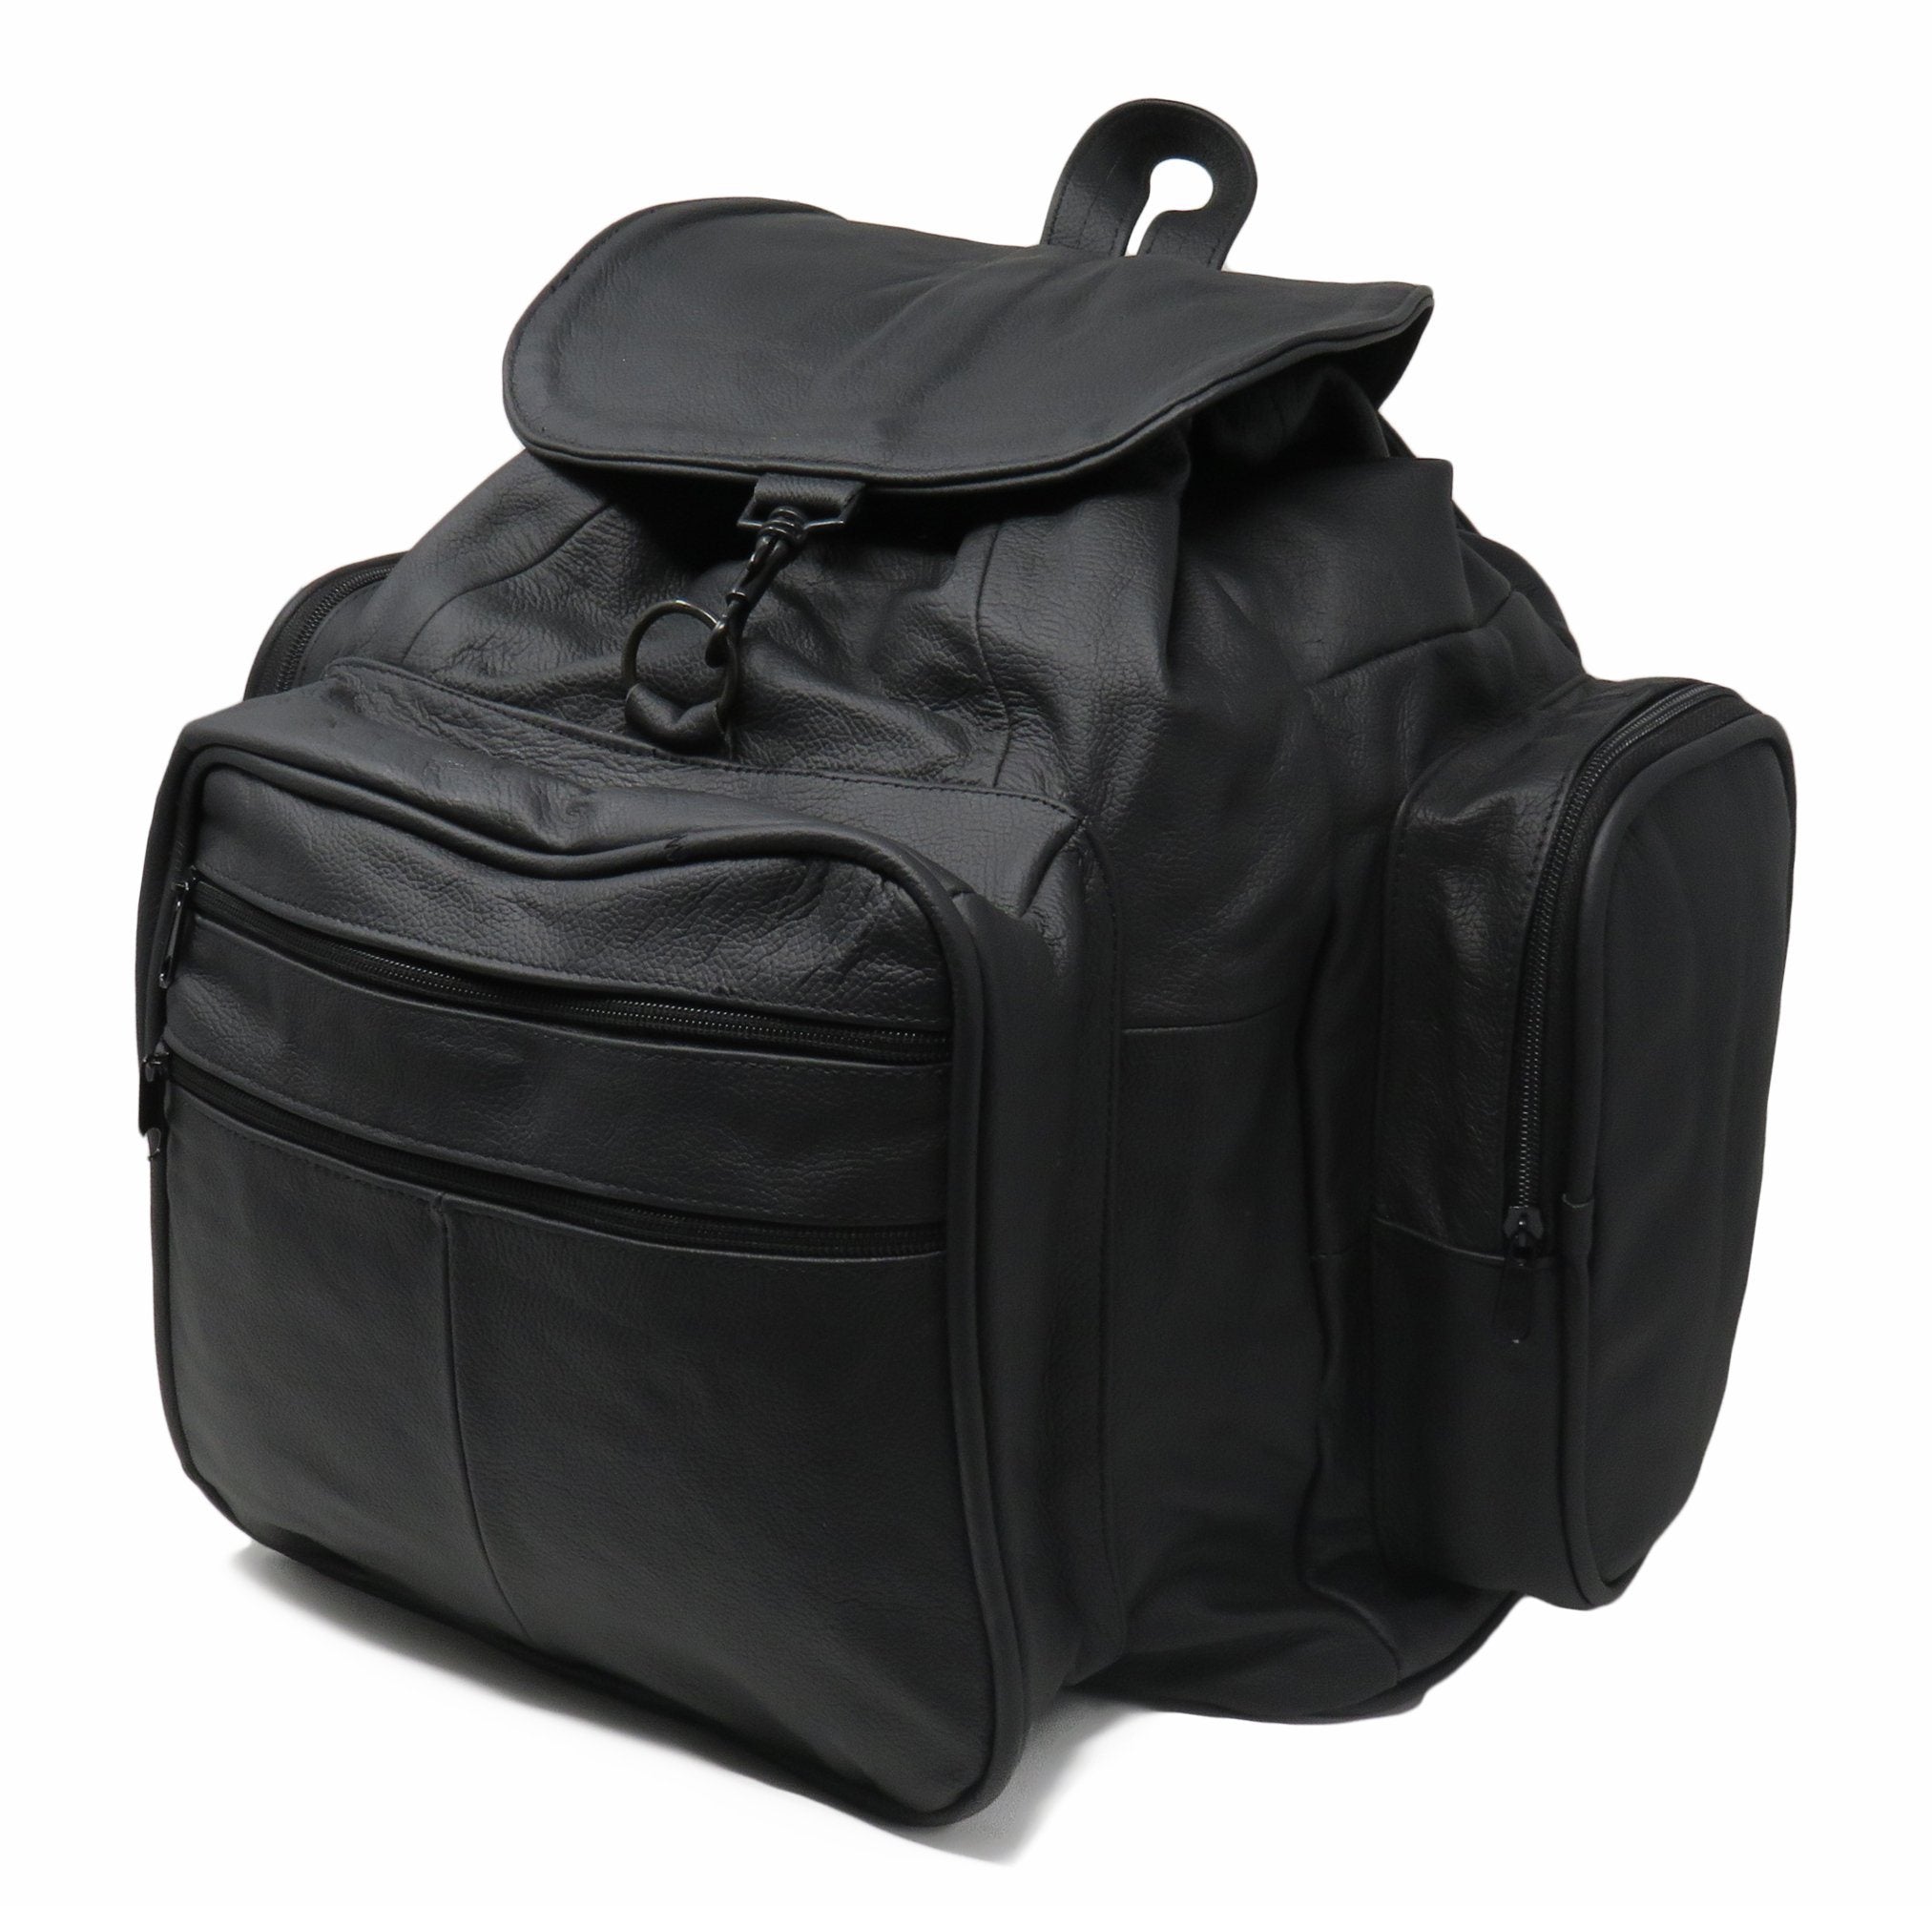 Jumbo Strong Black Leather Backpack